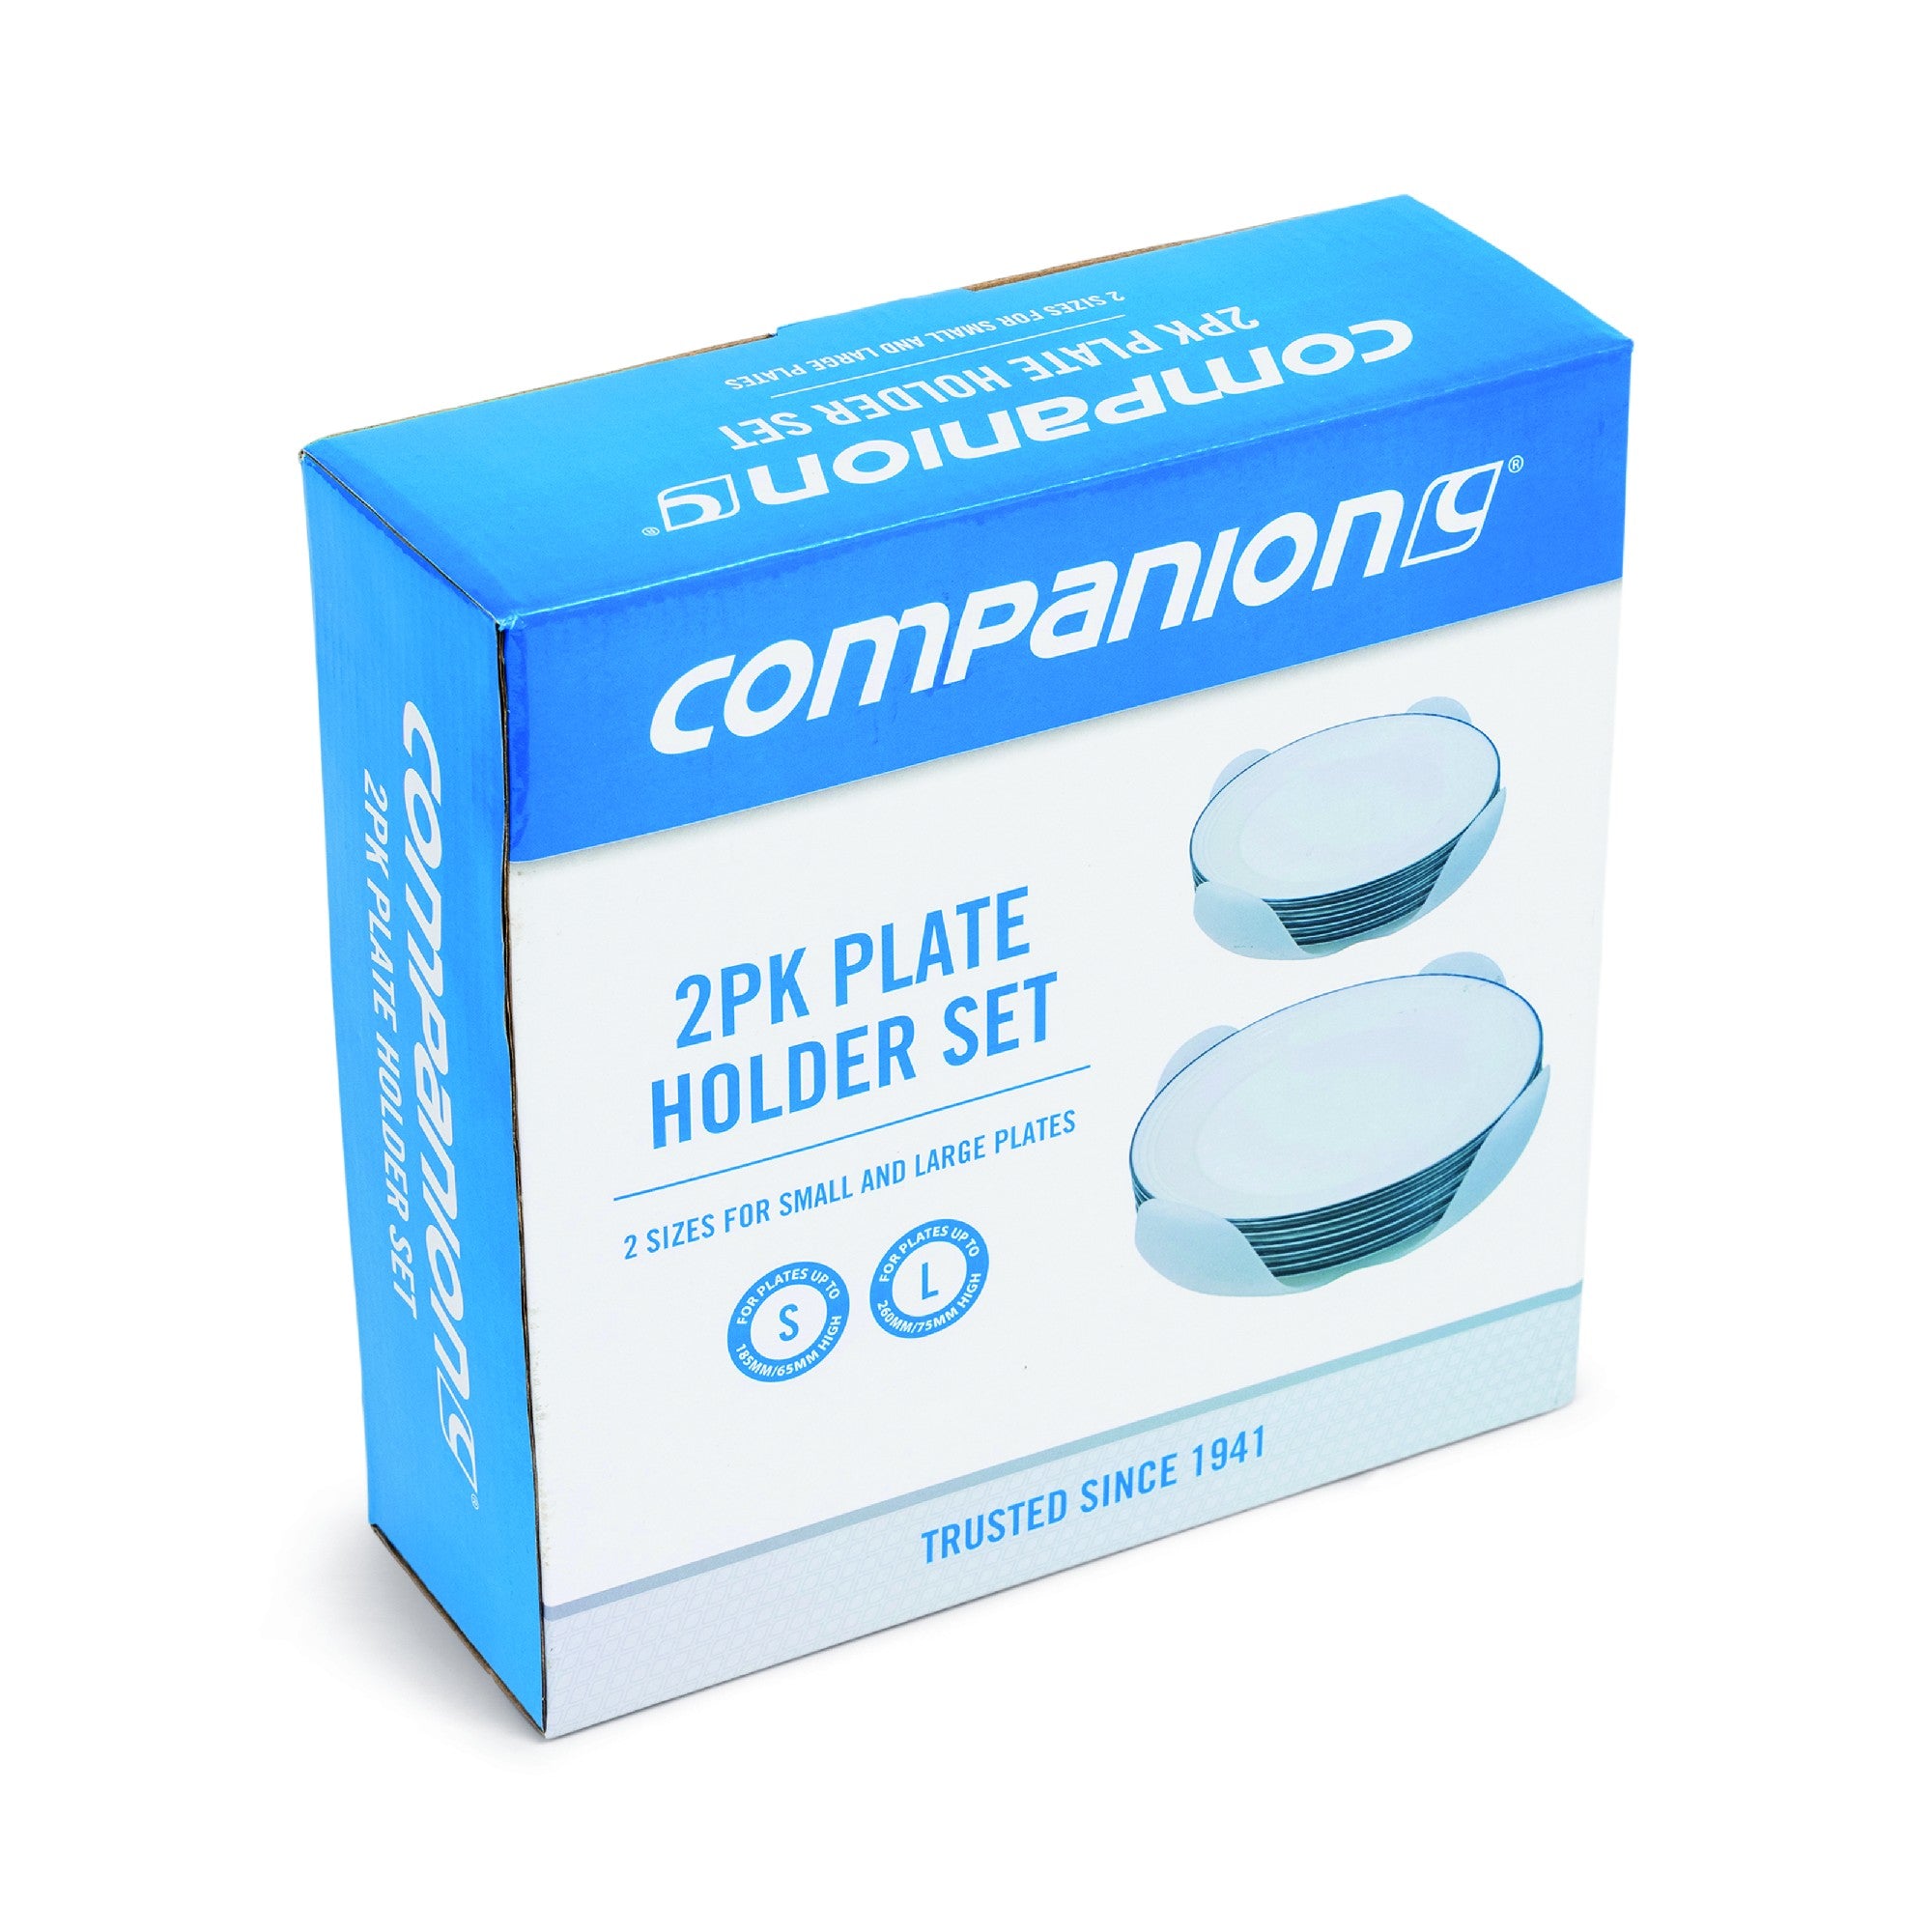 Companion Plate Holder Set 2pk